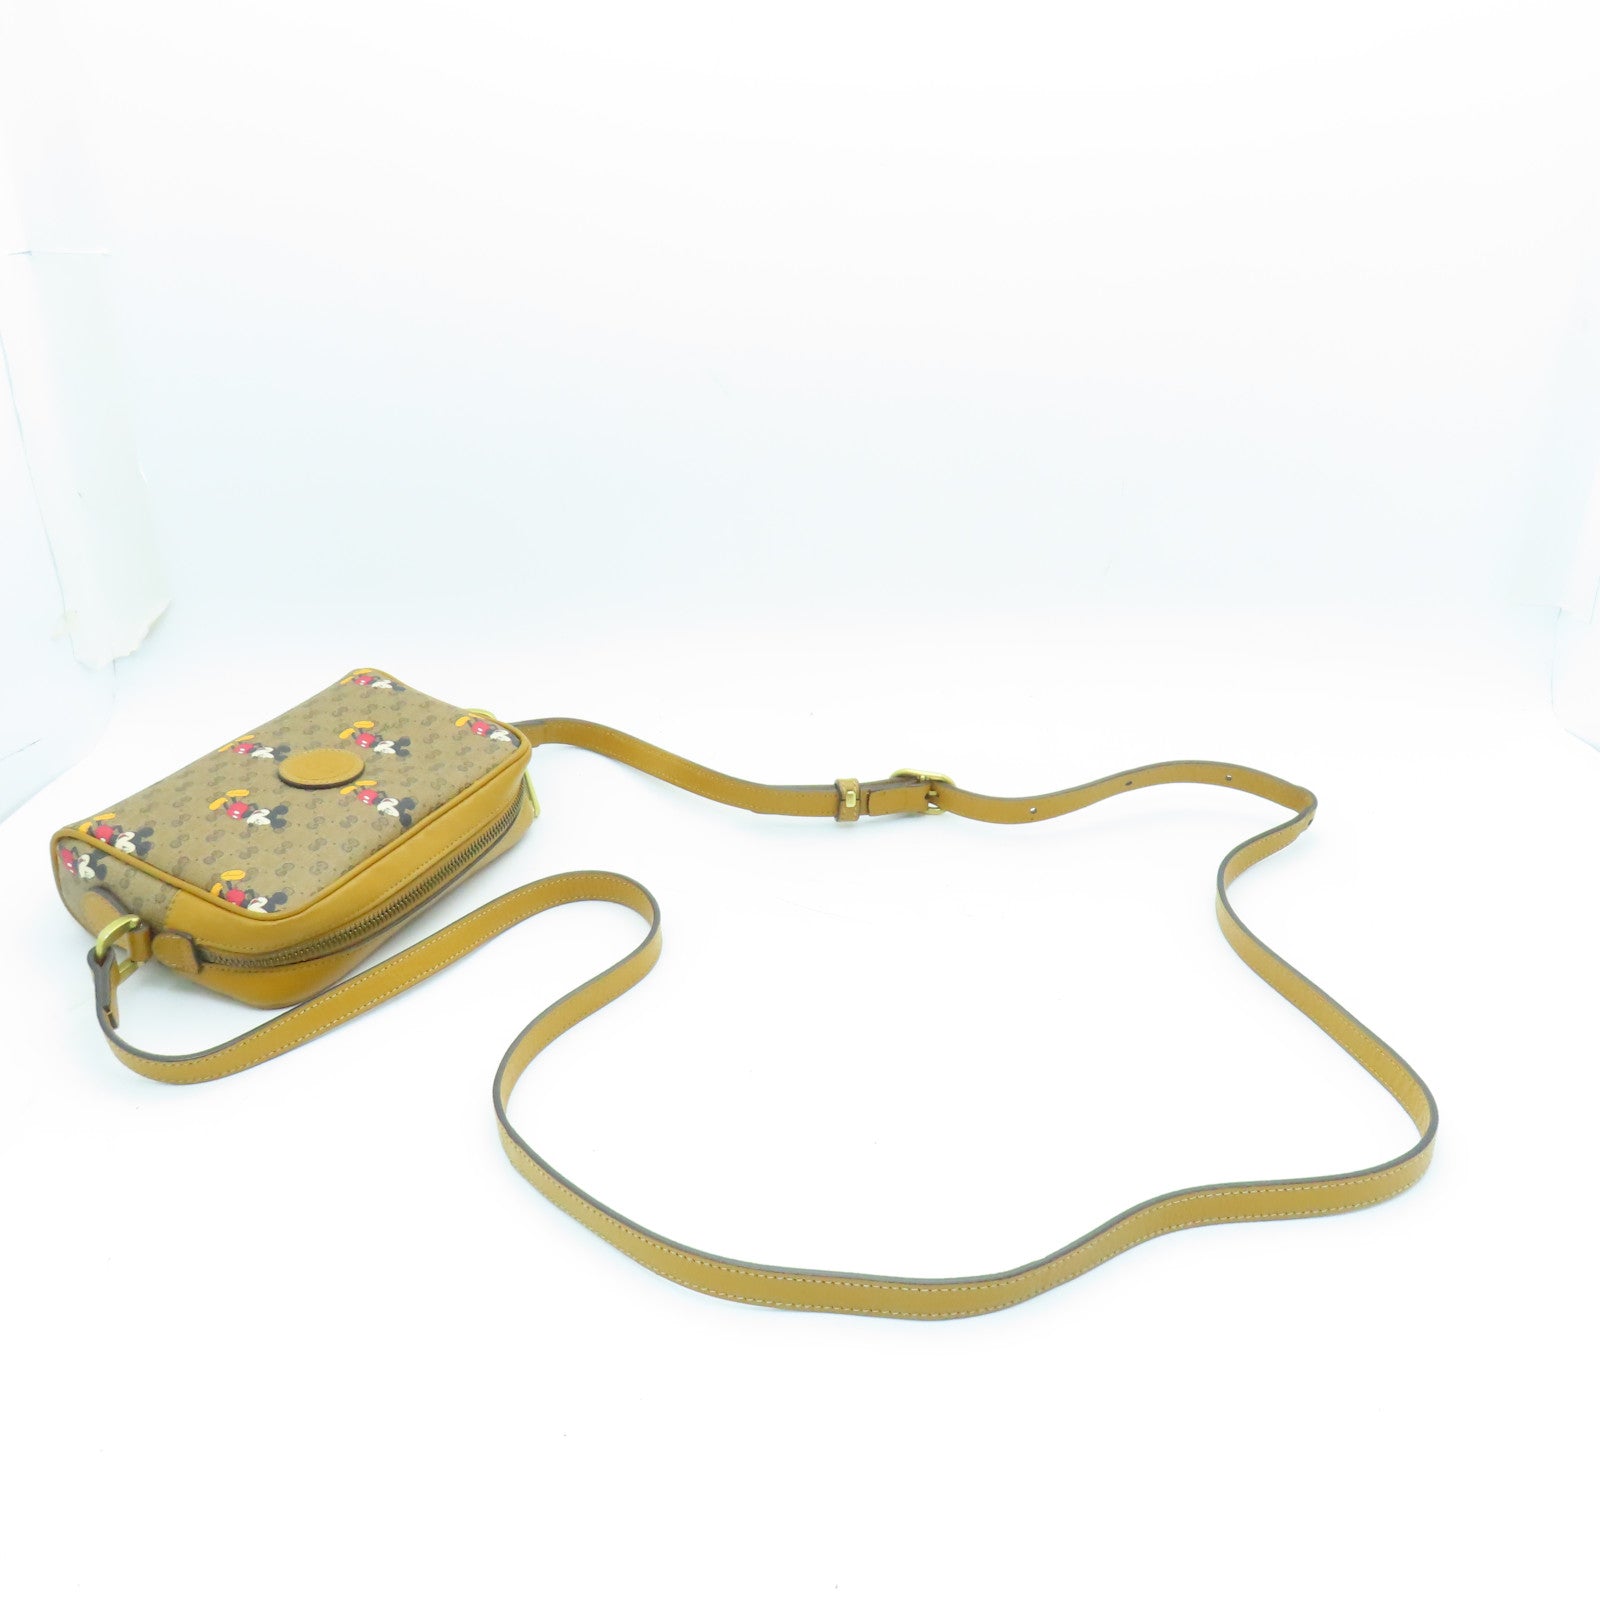 GUCCI Coated Canvas Gucci x Disney Gold Buckle Shoulder Bag Brown